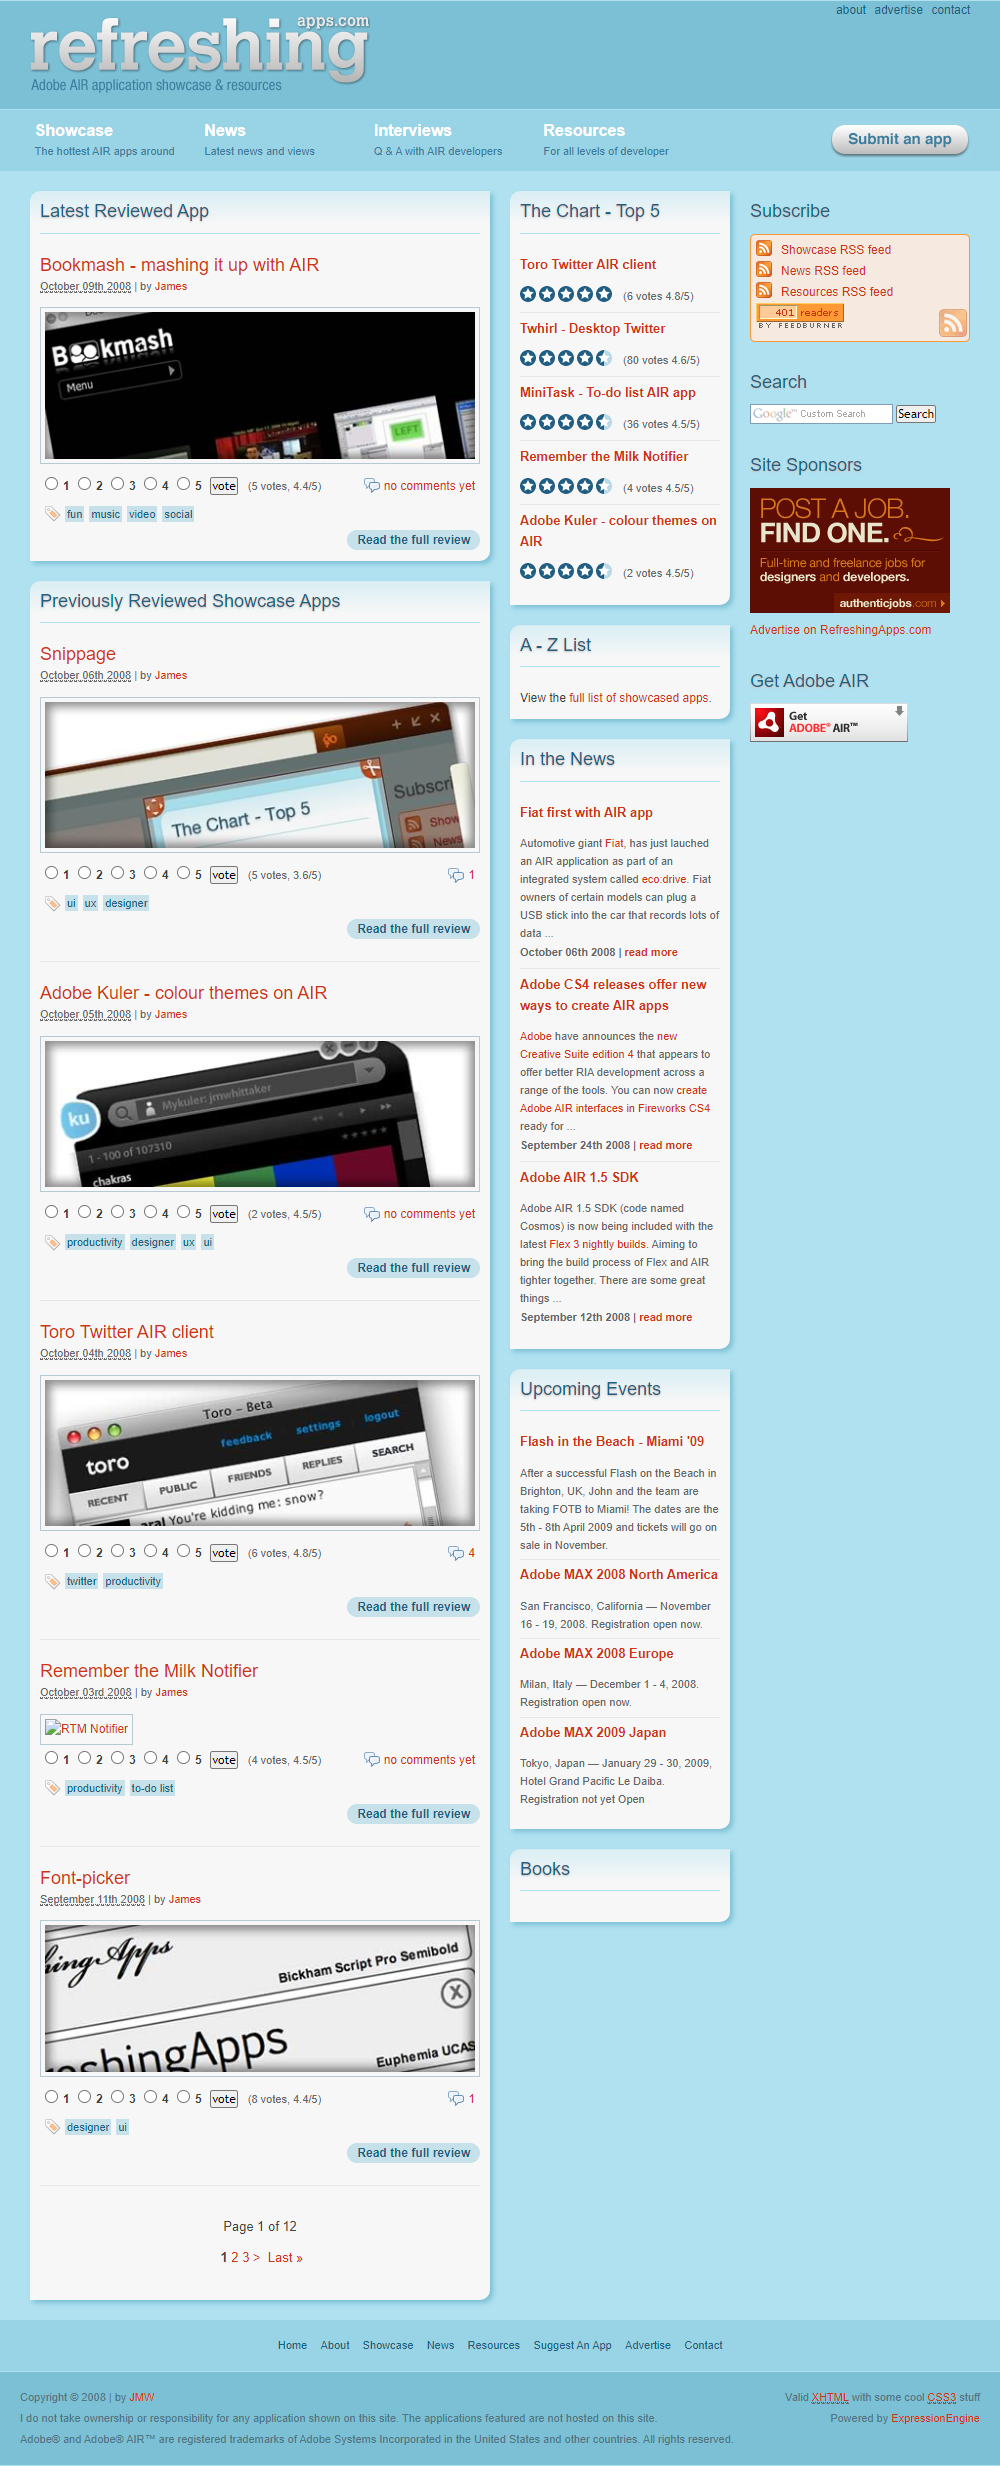 RefreshingApps website in 2008